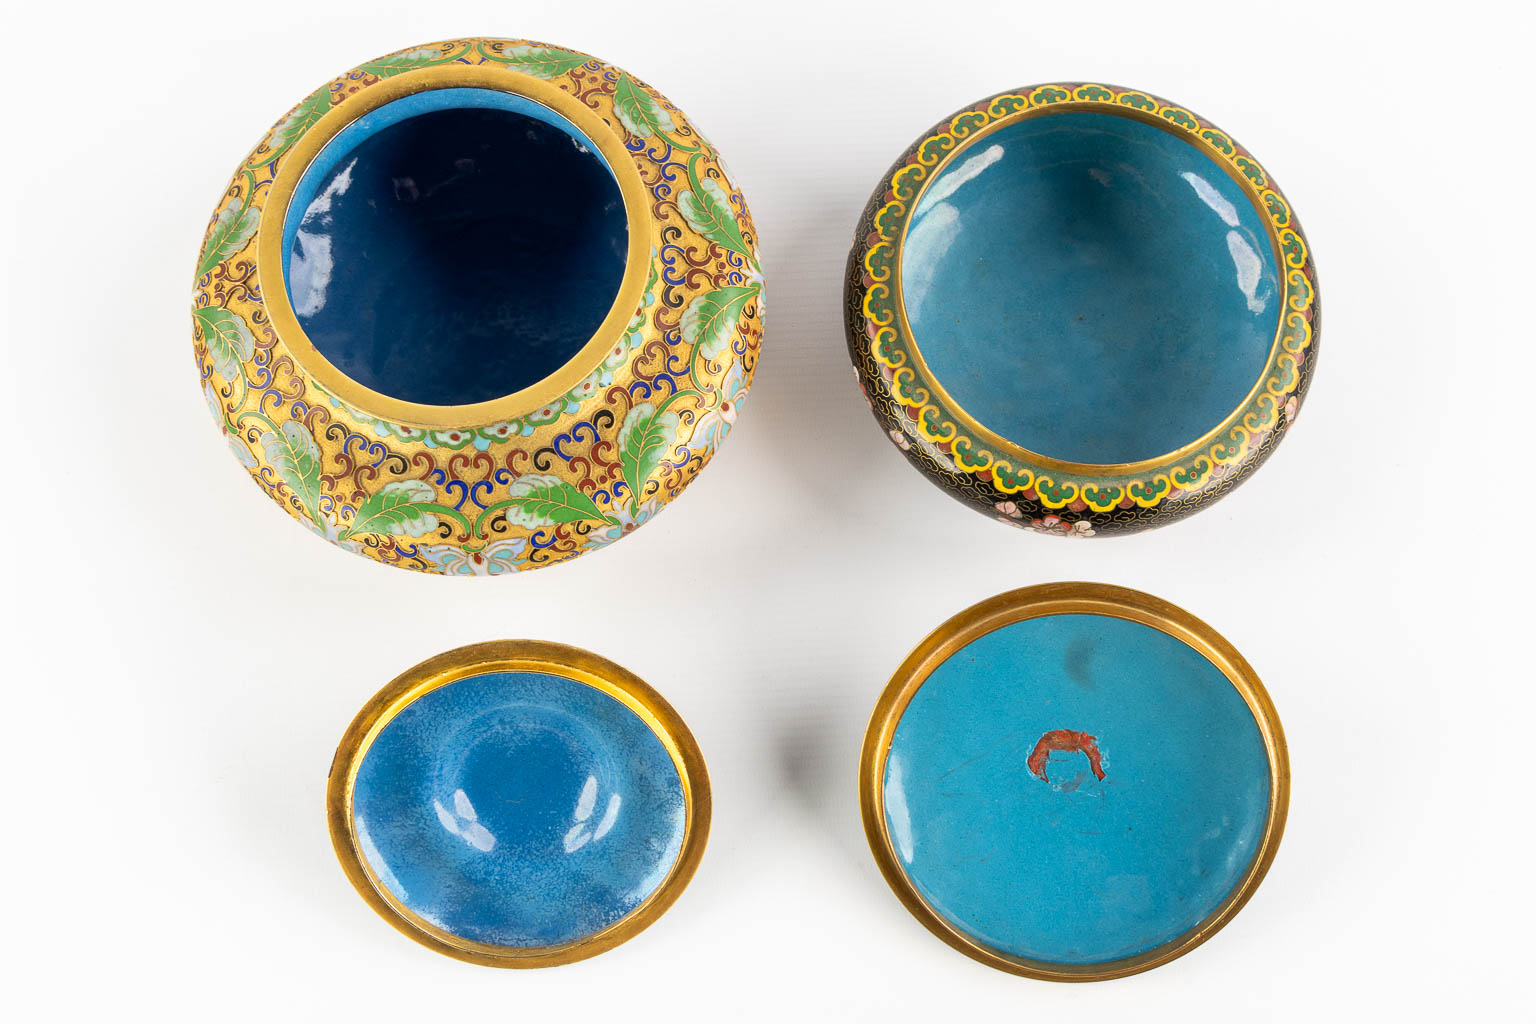 Twelve pieces of Cloisonné enamelled vases and trinklet bowls. Three pairs. (H:23 cm)